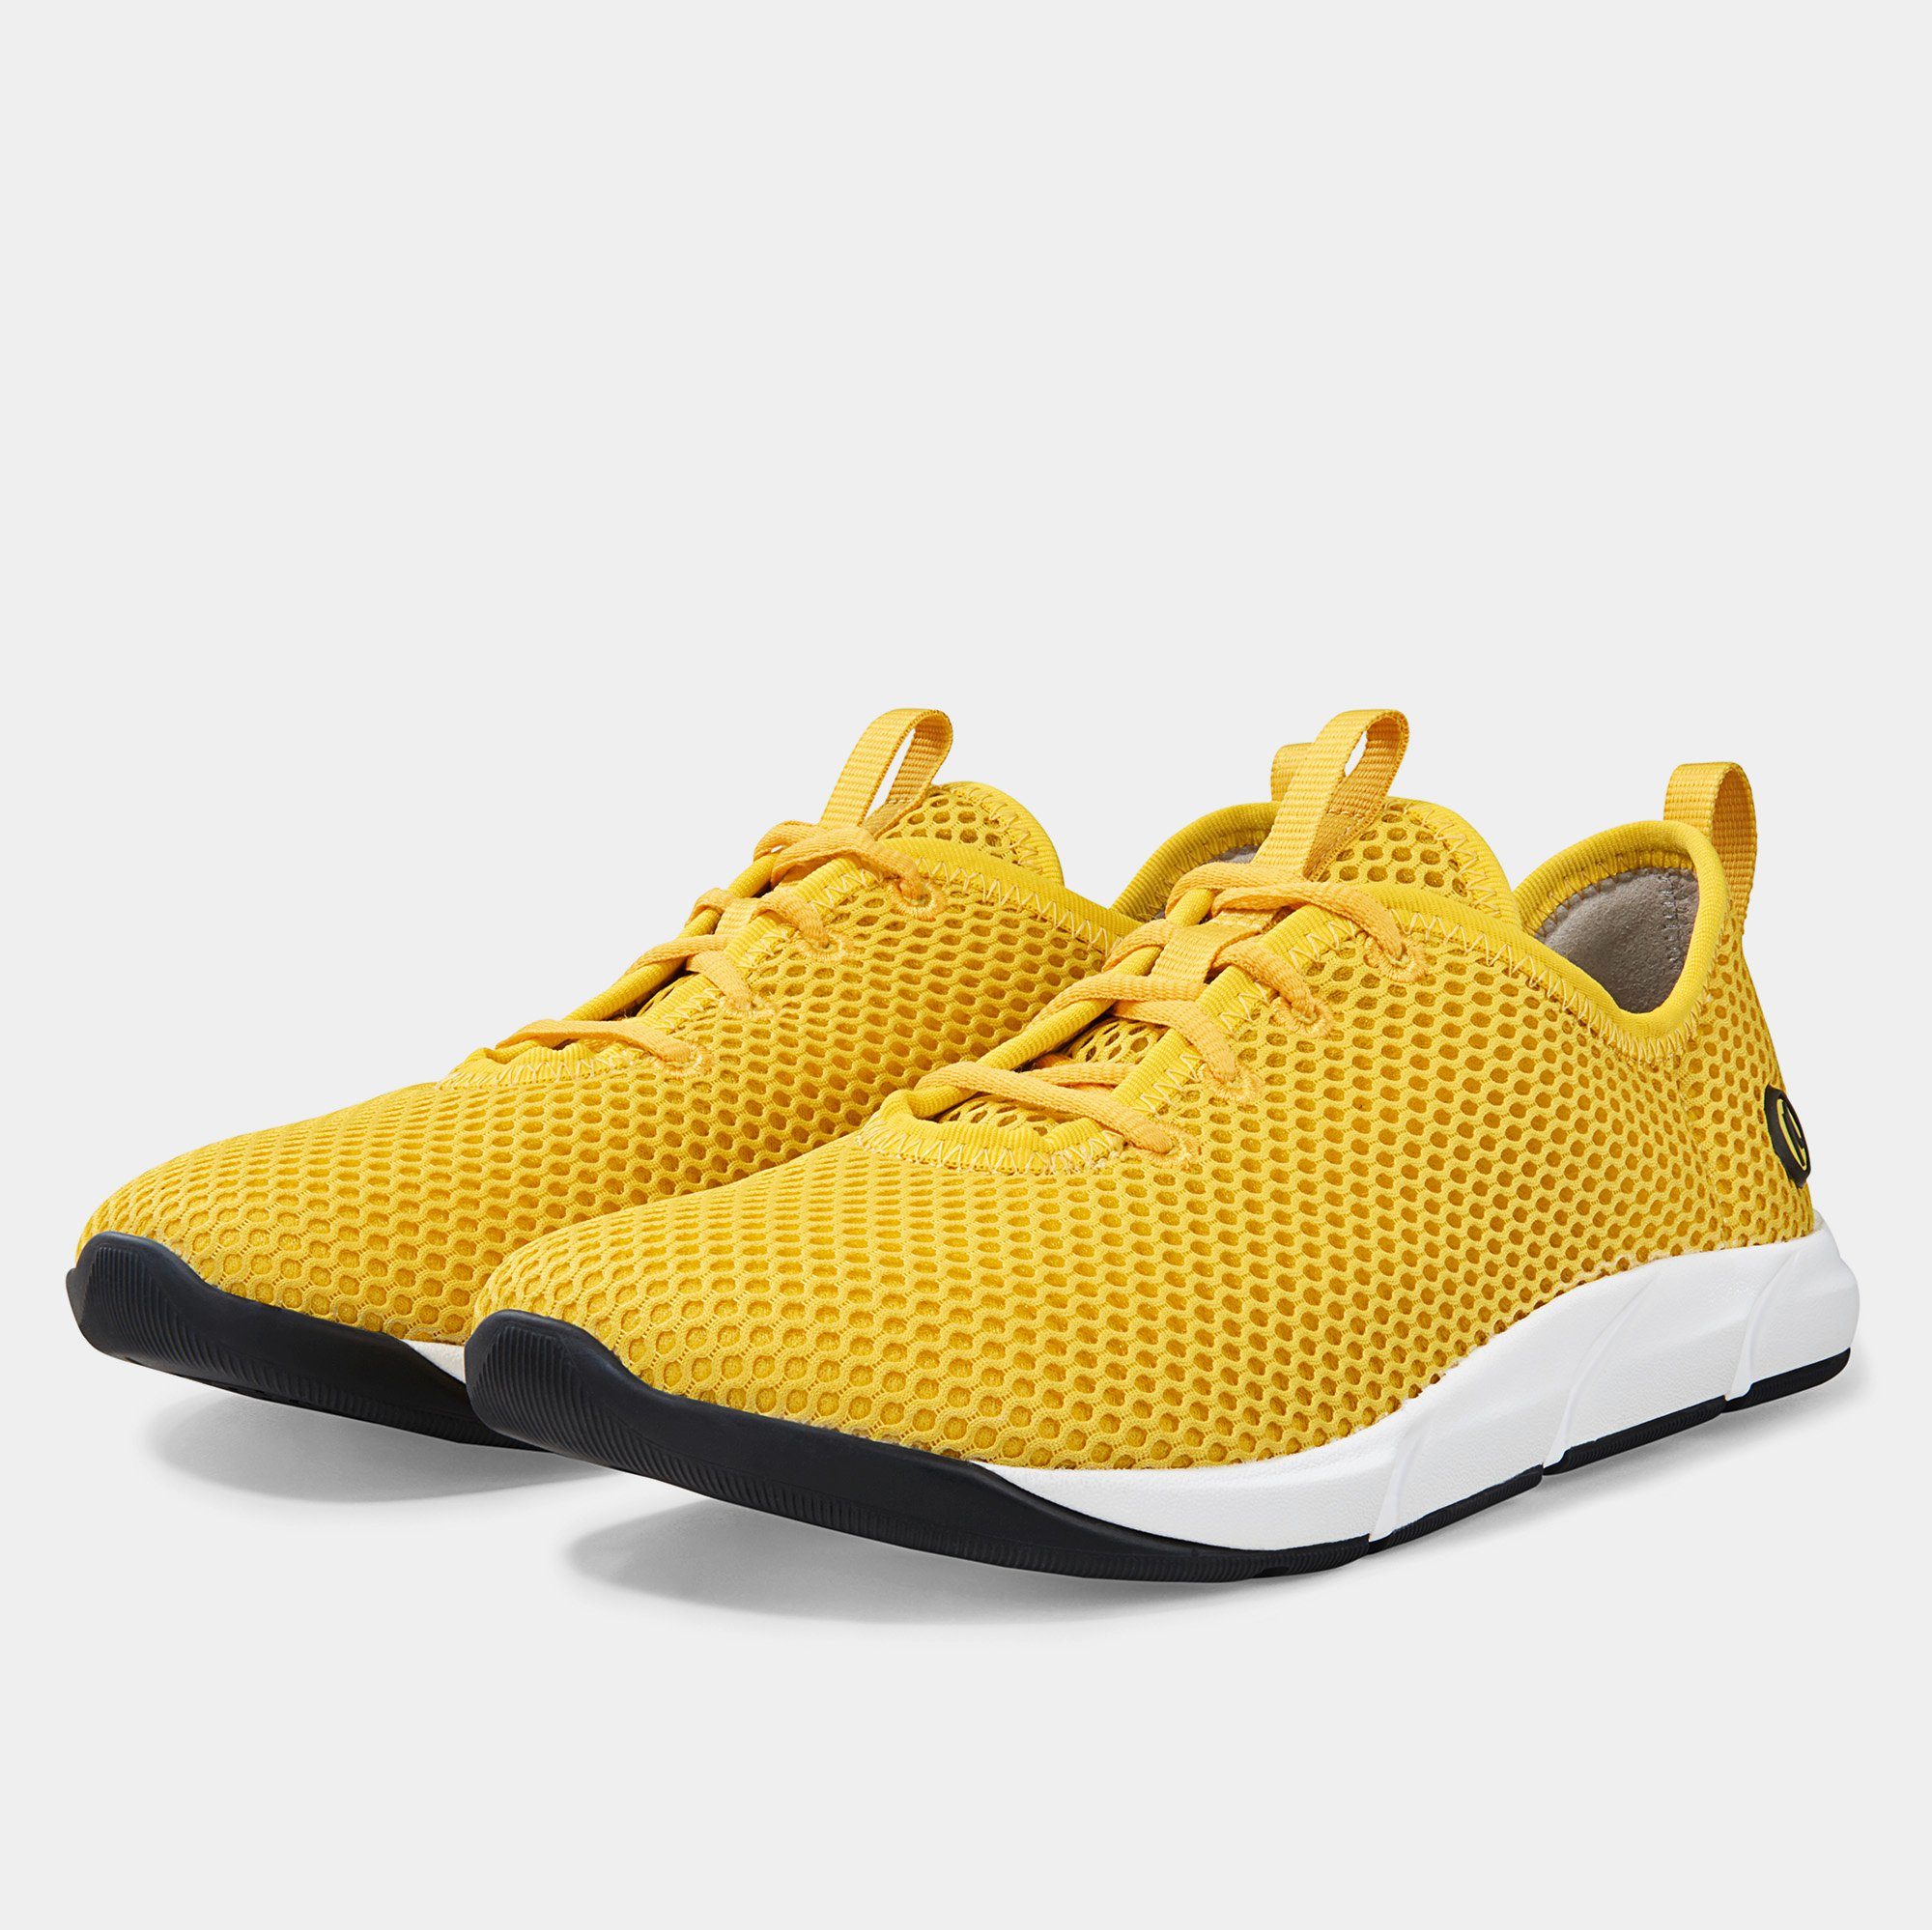 BÄR Damenschuh - Modell motionToes 2.0 in der Farbe Gelb Sneaker | Sneaker low